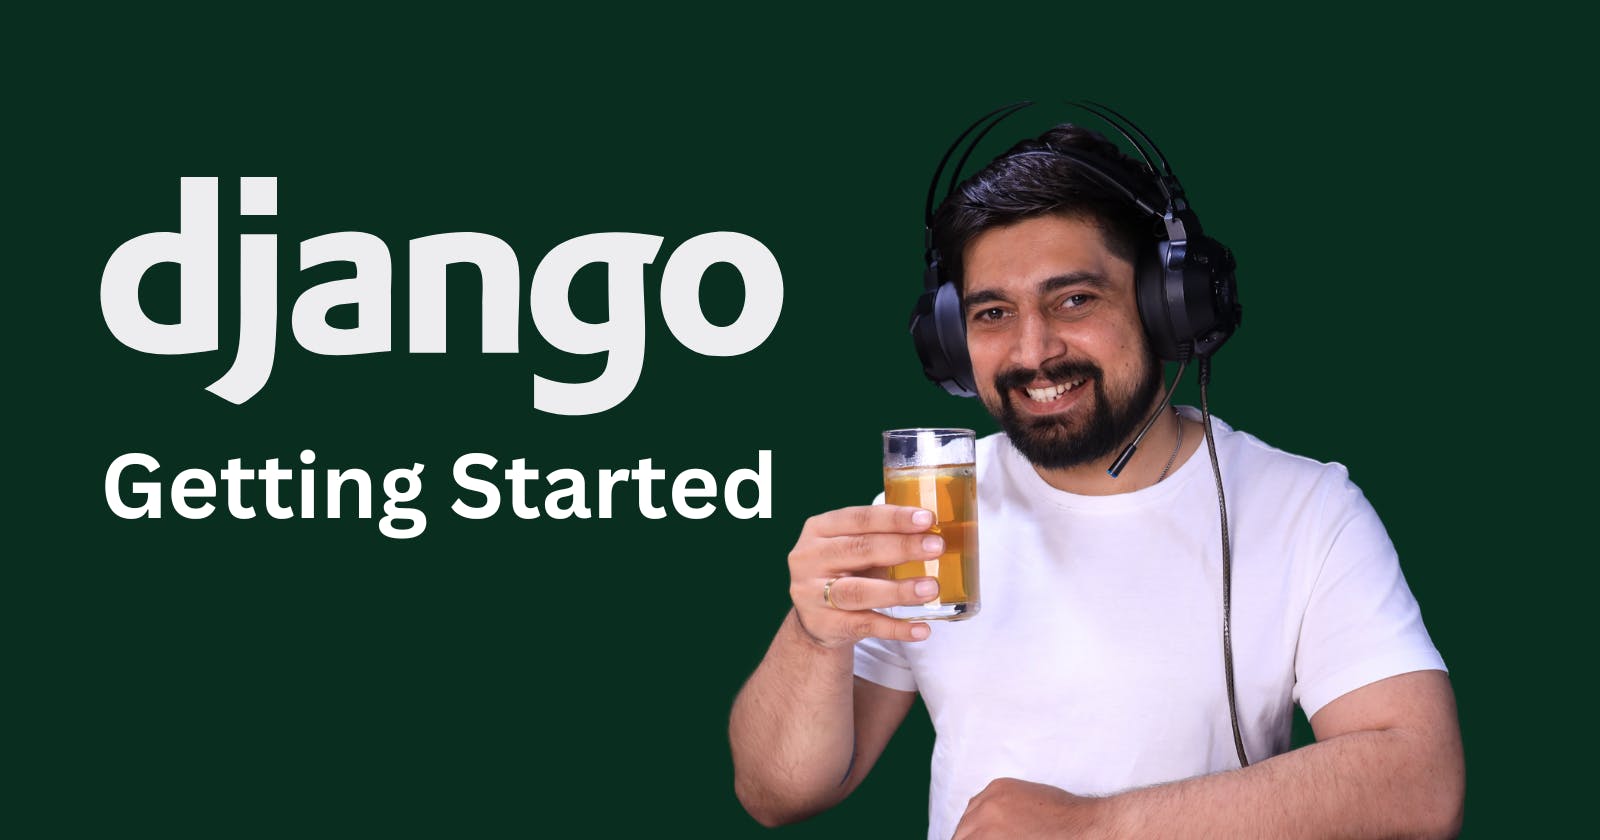 Getting Started with Django